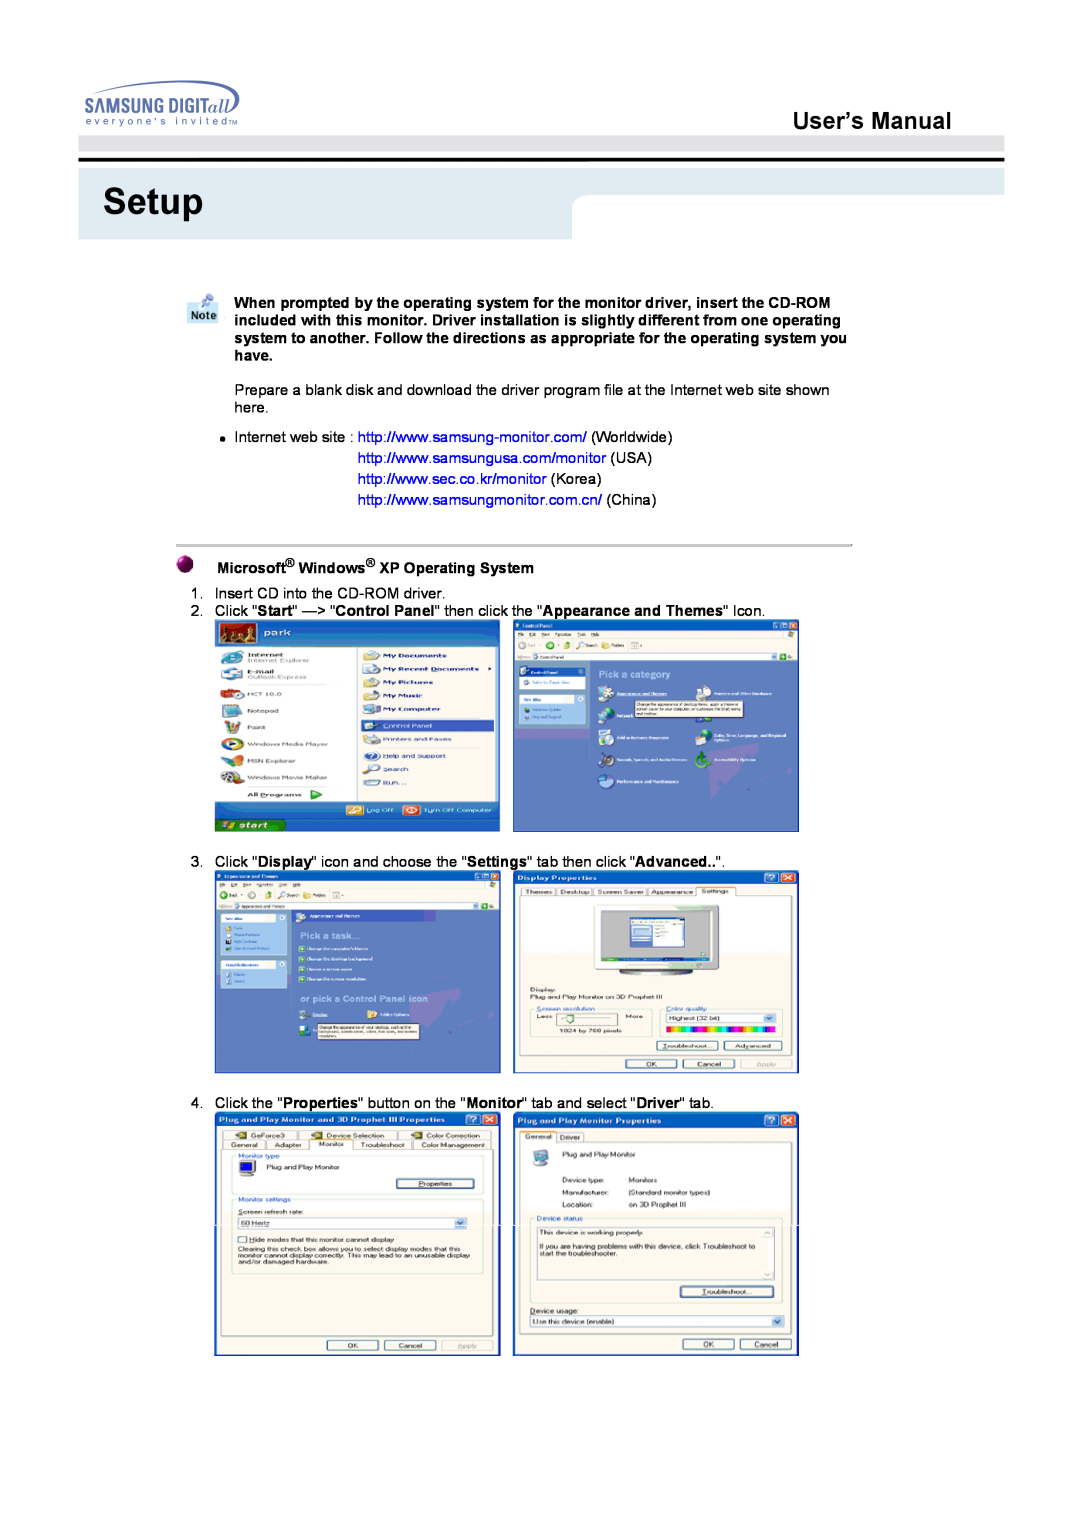 Samsung 172S manual Setup, User’s Manual, Microsoft Windows XP Operating System 